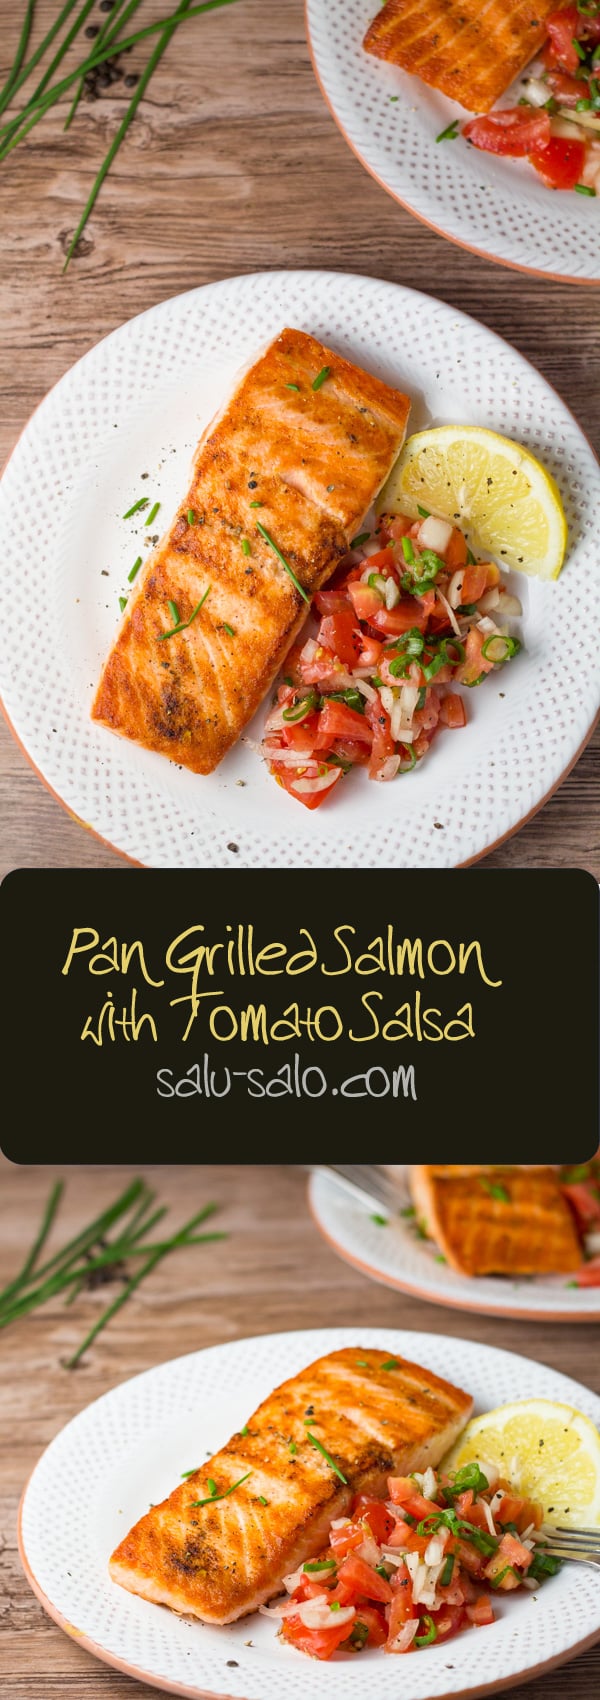 Pan Grilled Salmon with Tomato Salsa